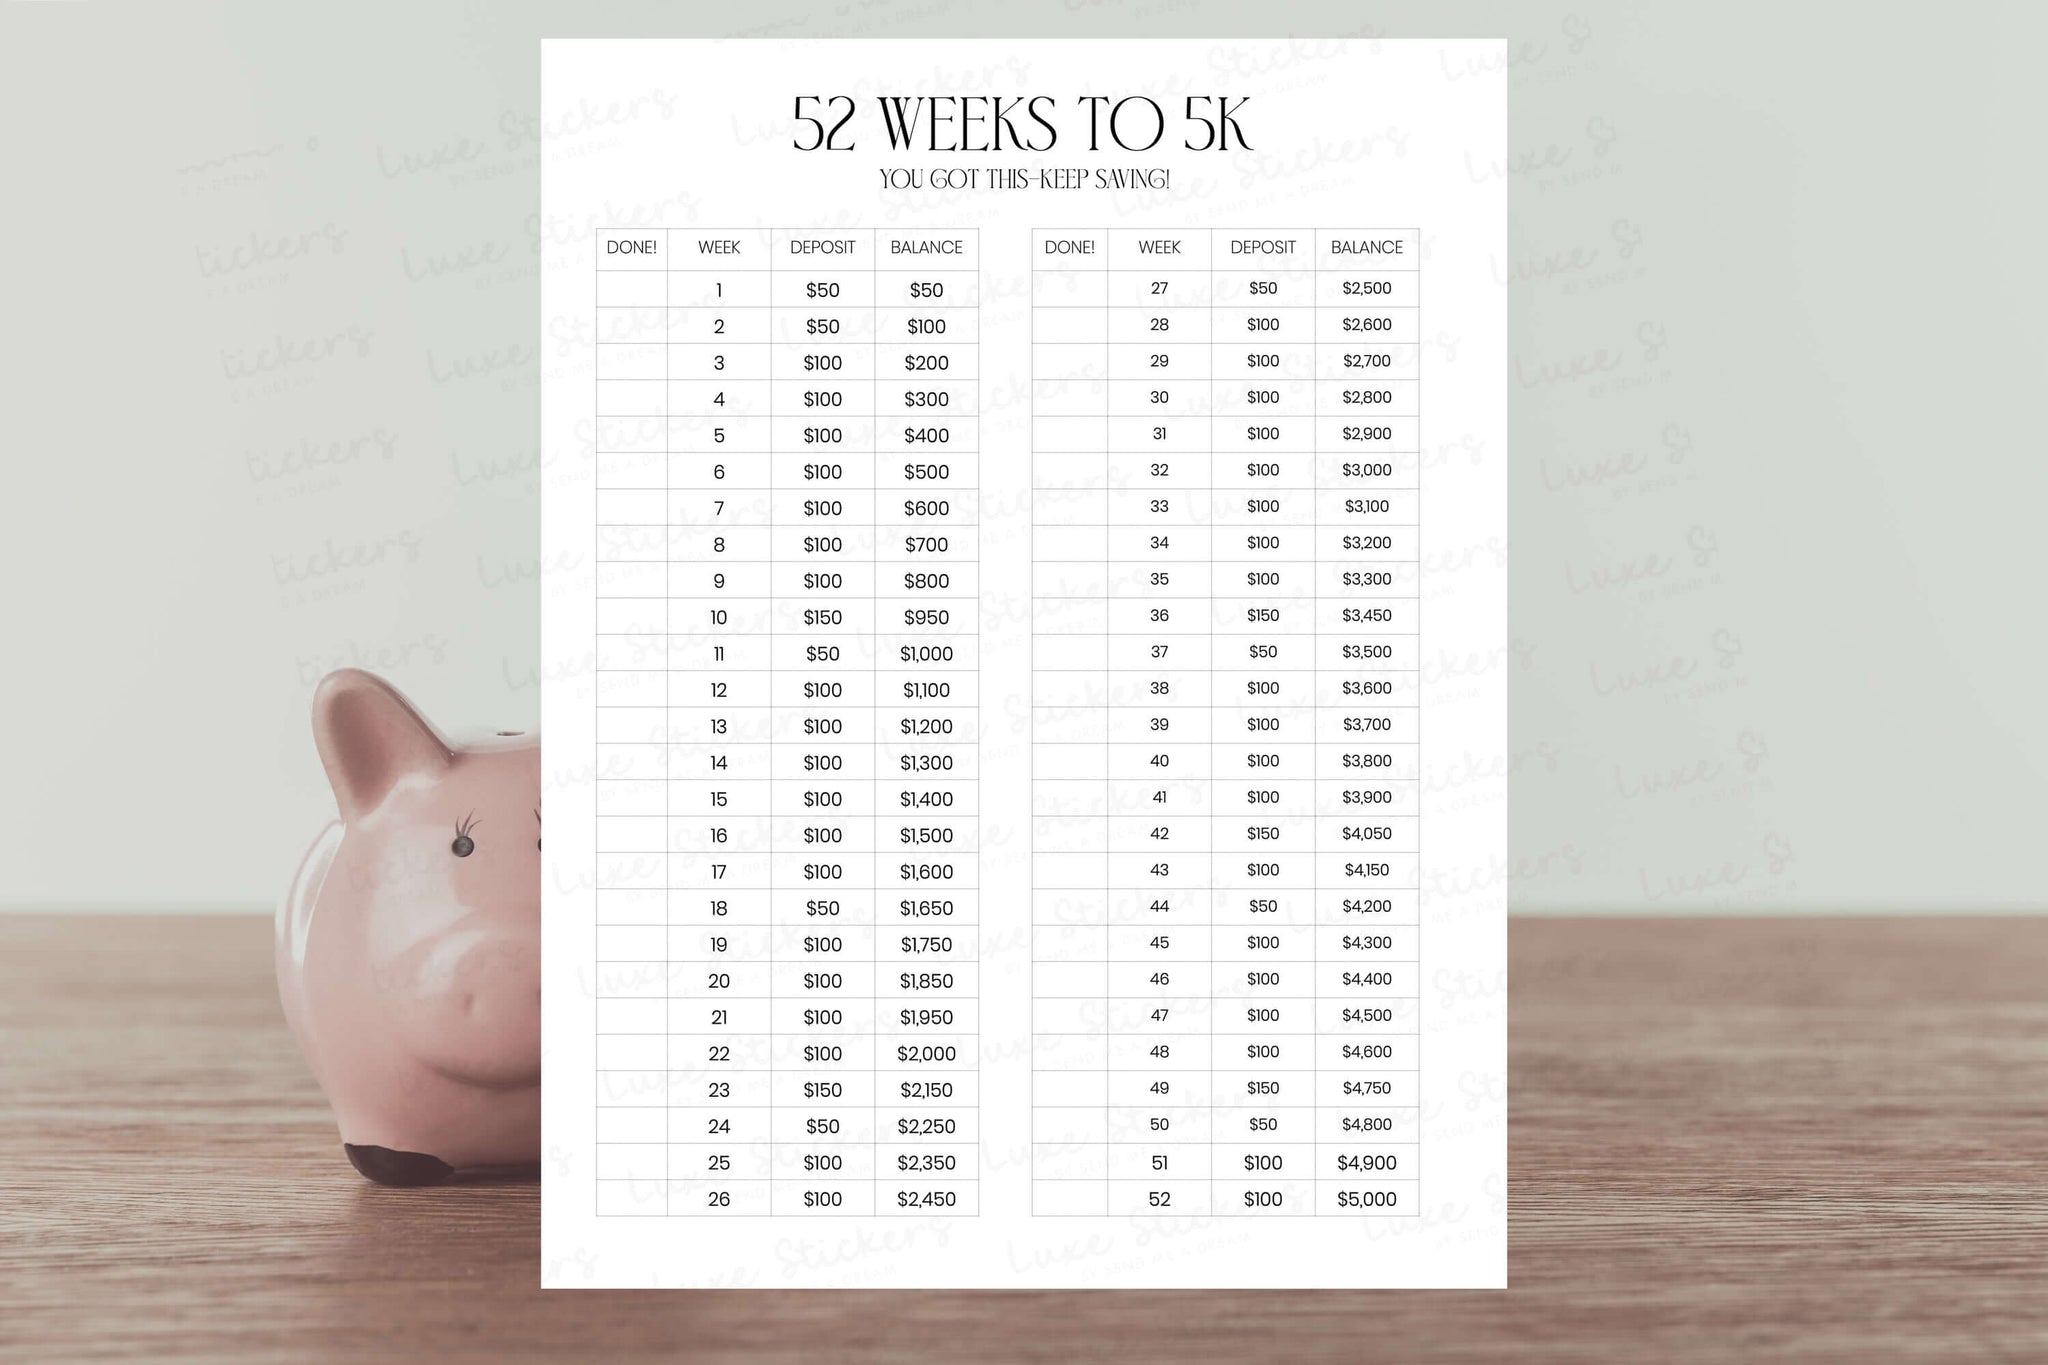 52 Weeks to 5K Savings Challenge